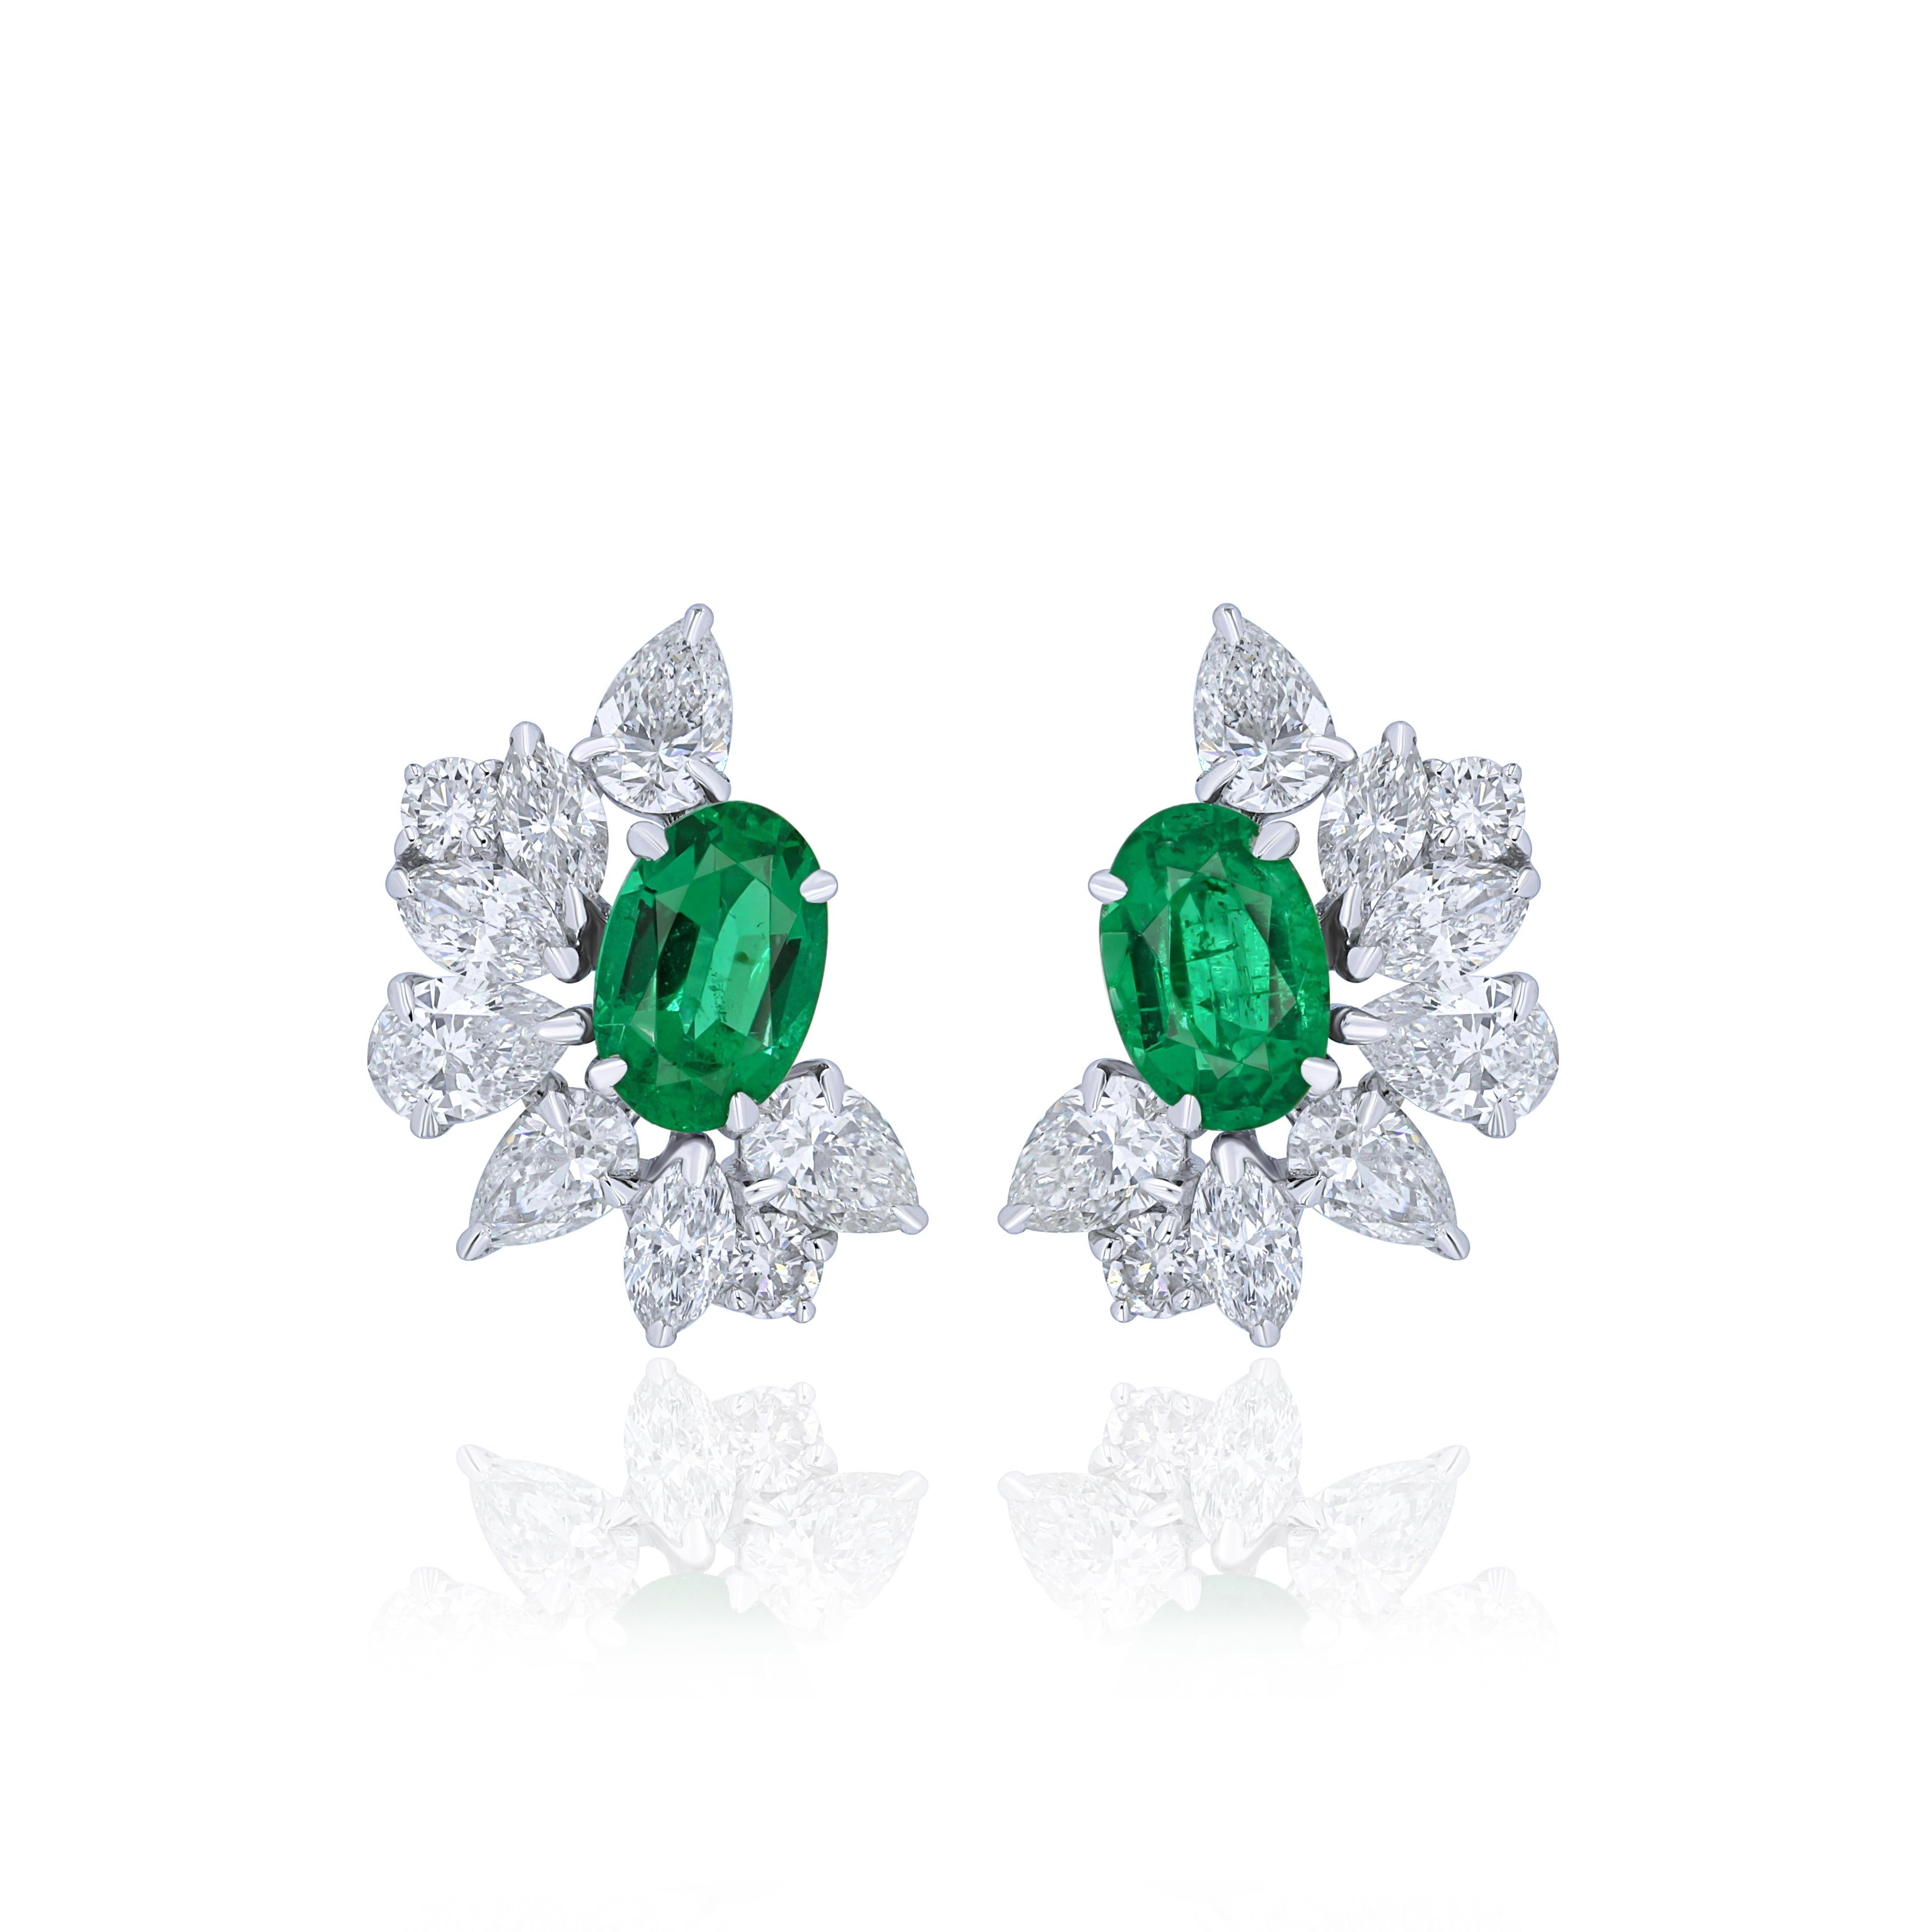 Emerald and Diamond Earring 18 Karat White Gold Handcraft Jewelry, Birth Stone